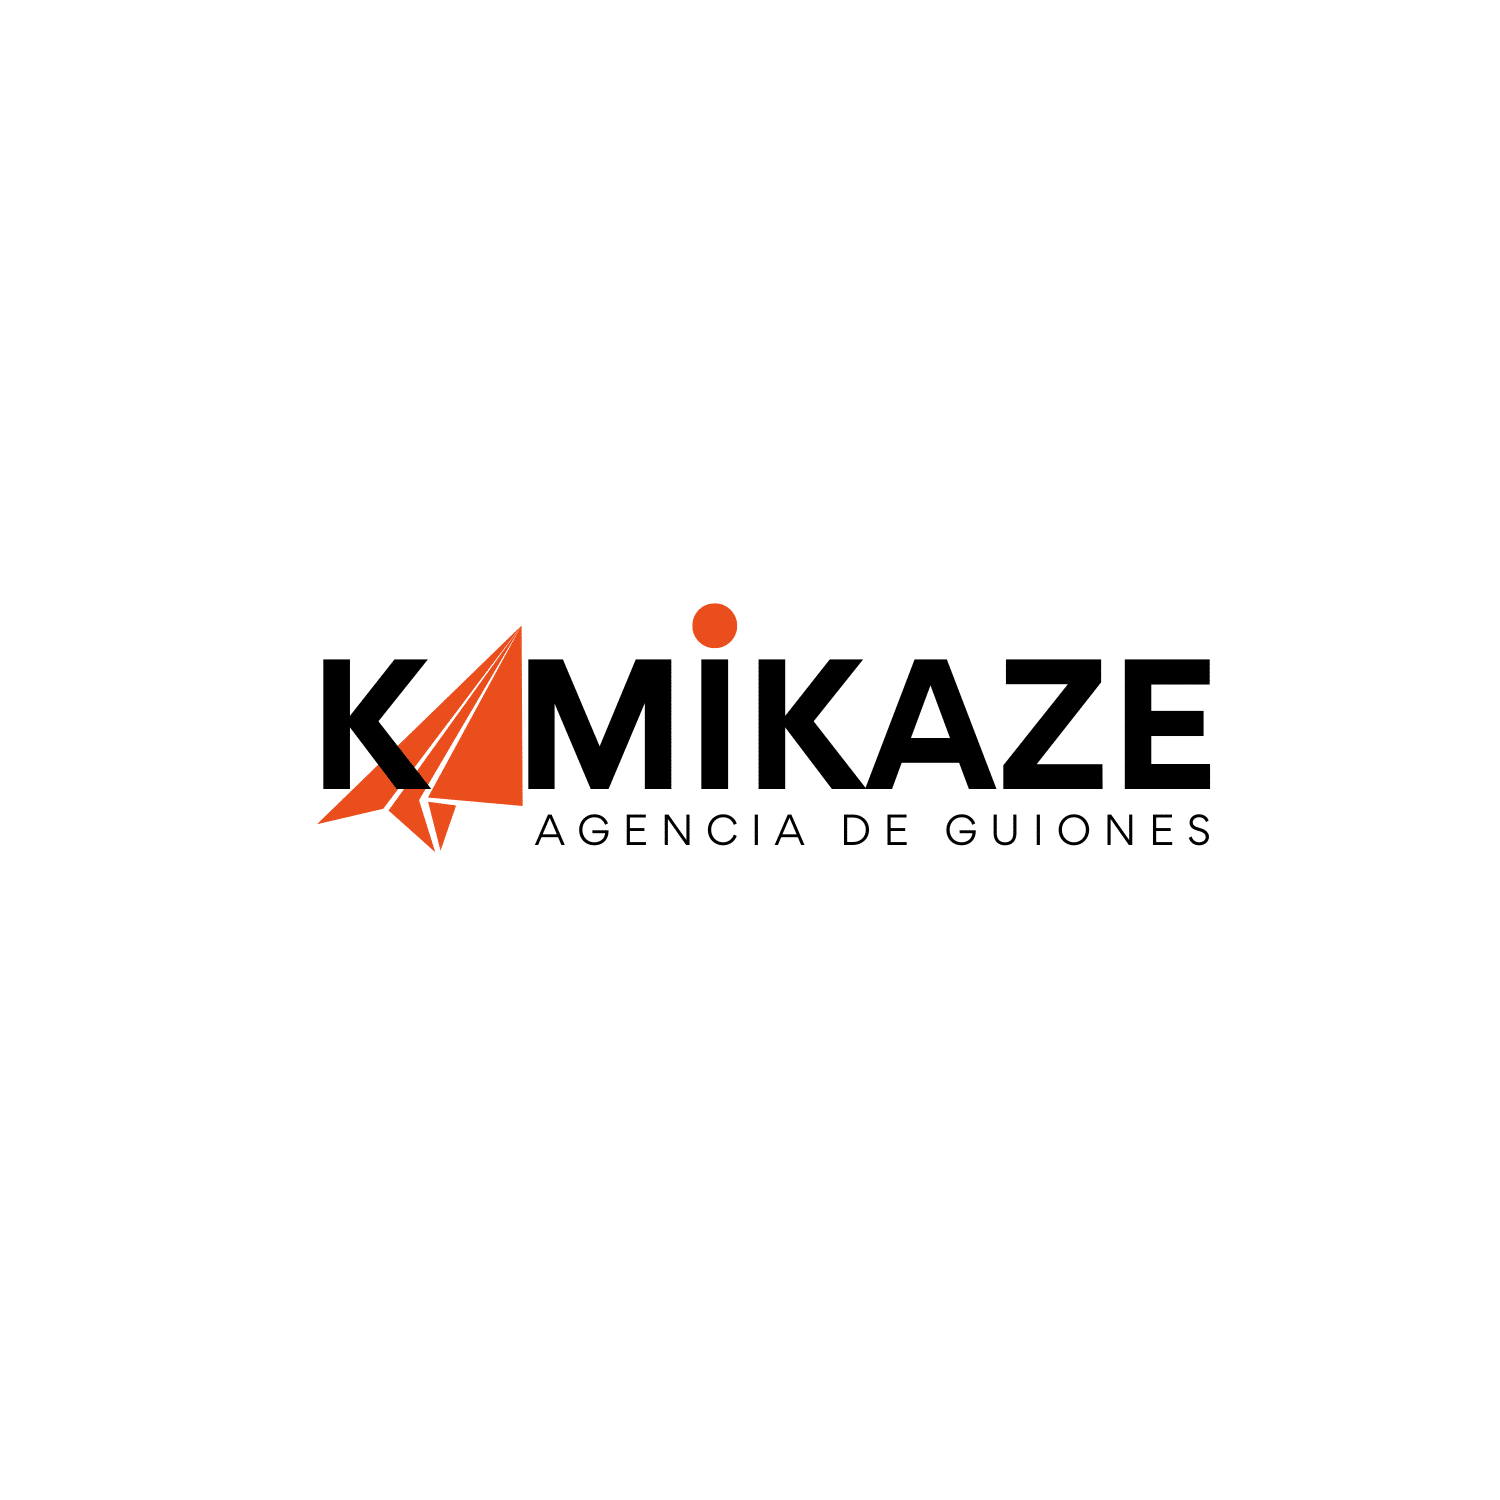 KAMIKAZE logo 1500